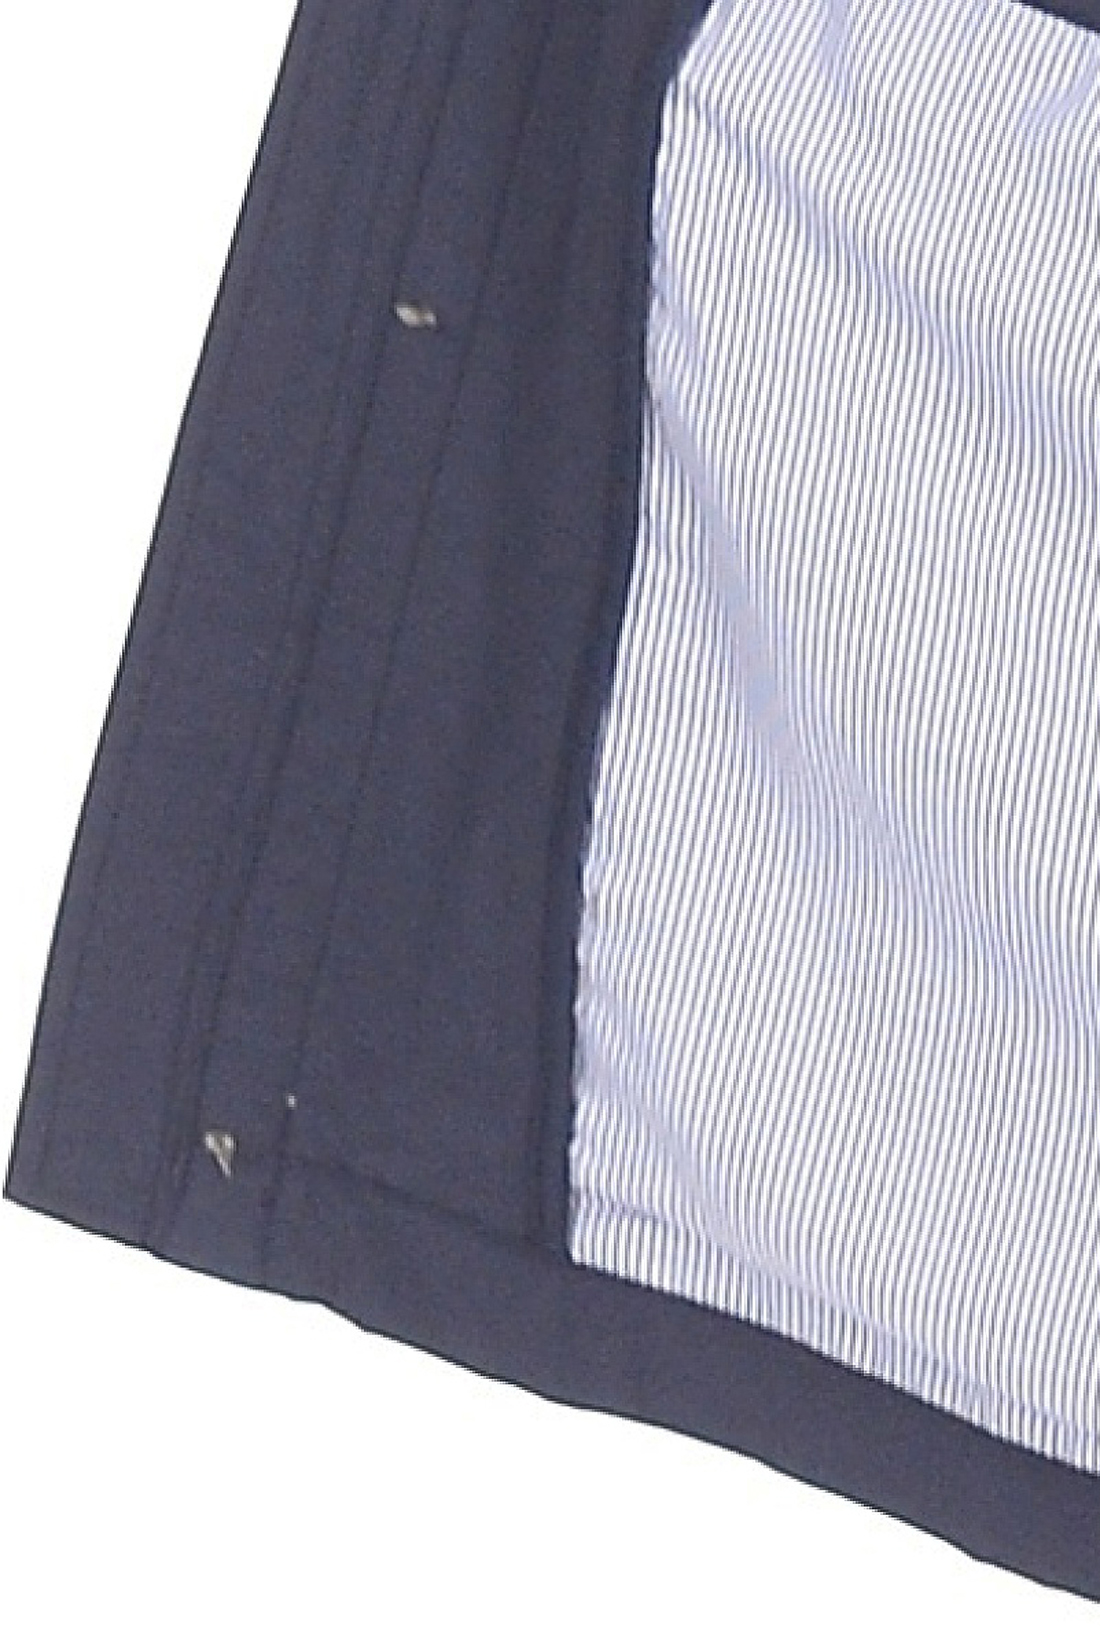 Ветровка с контрастными деталями (арт. baon B608017), размер L, цвет синий Ветровка с контрастными деталями (арт. baon B608017) - фото 4